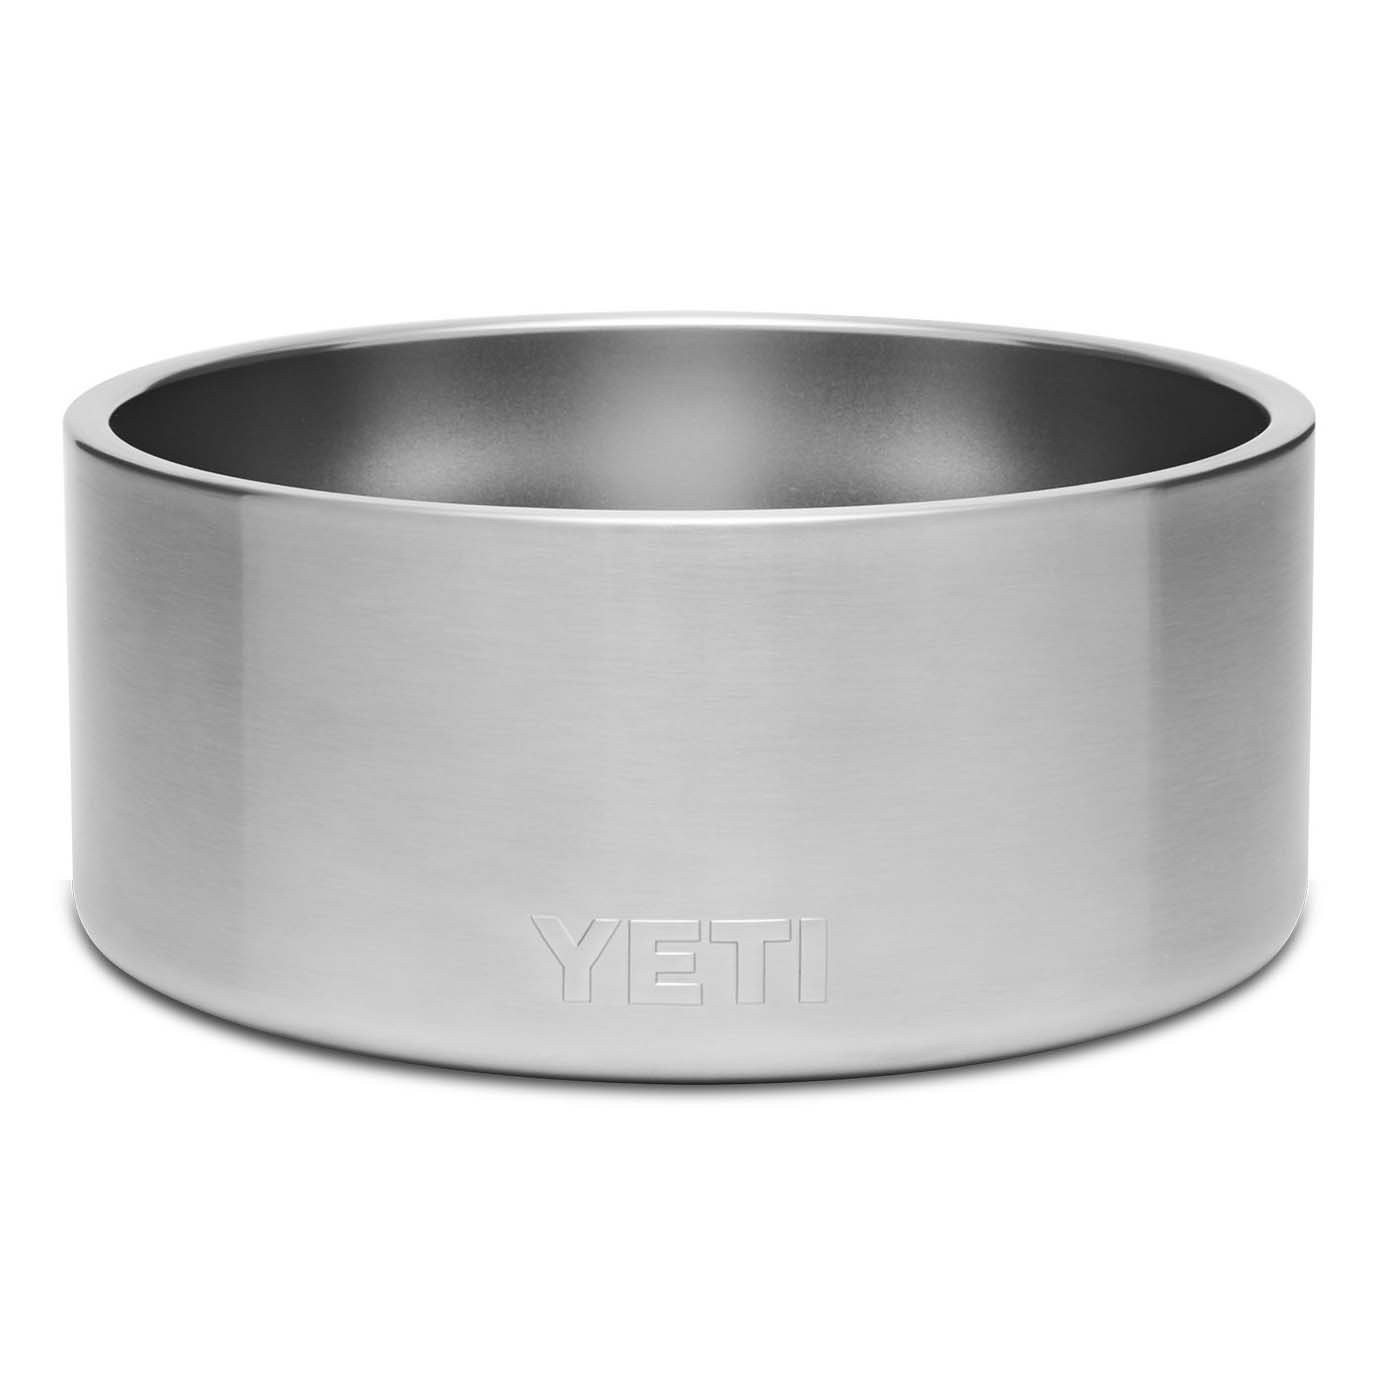 Yeti Boomer 8 Dog Bowl-Coolers & Drinkware-Yeti-Stainless Steel-Fishing Station